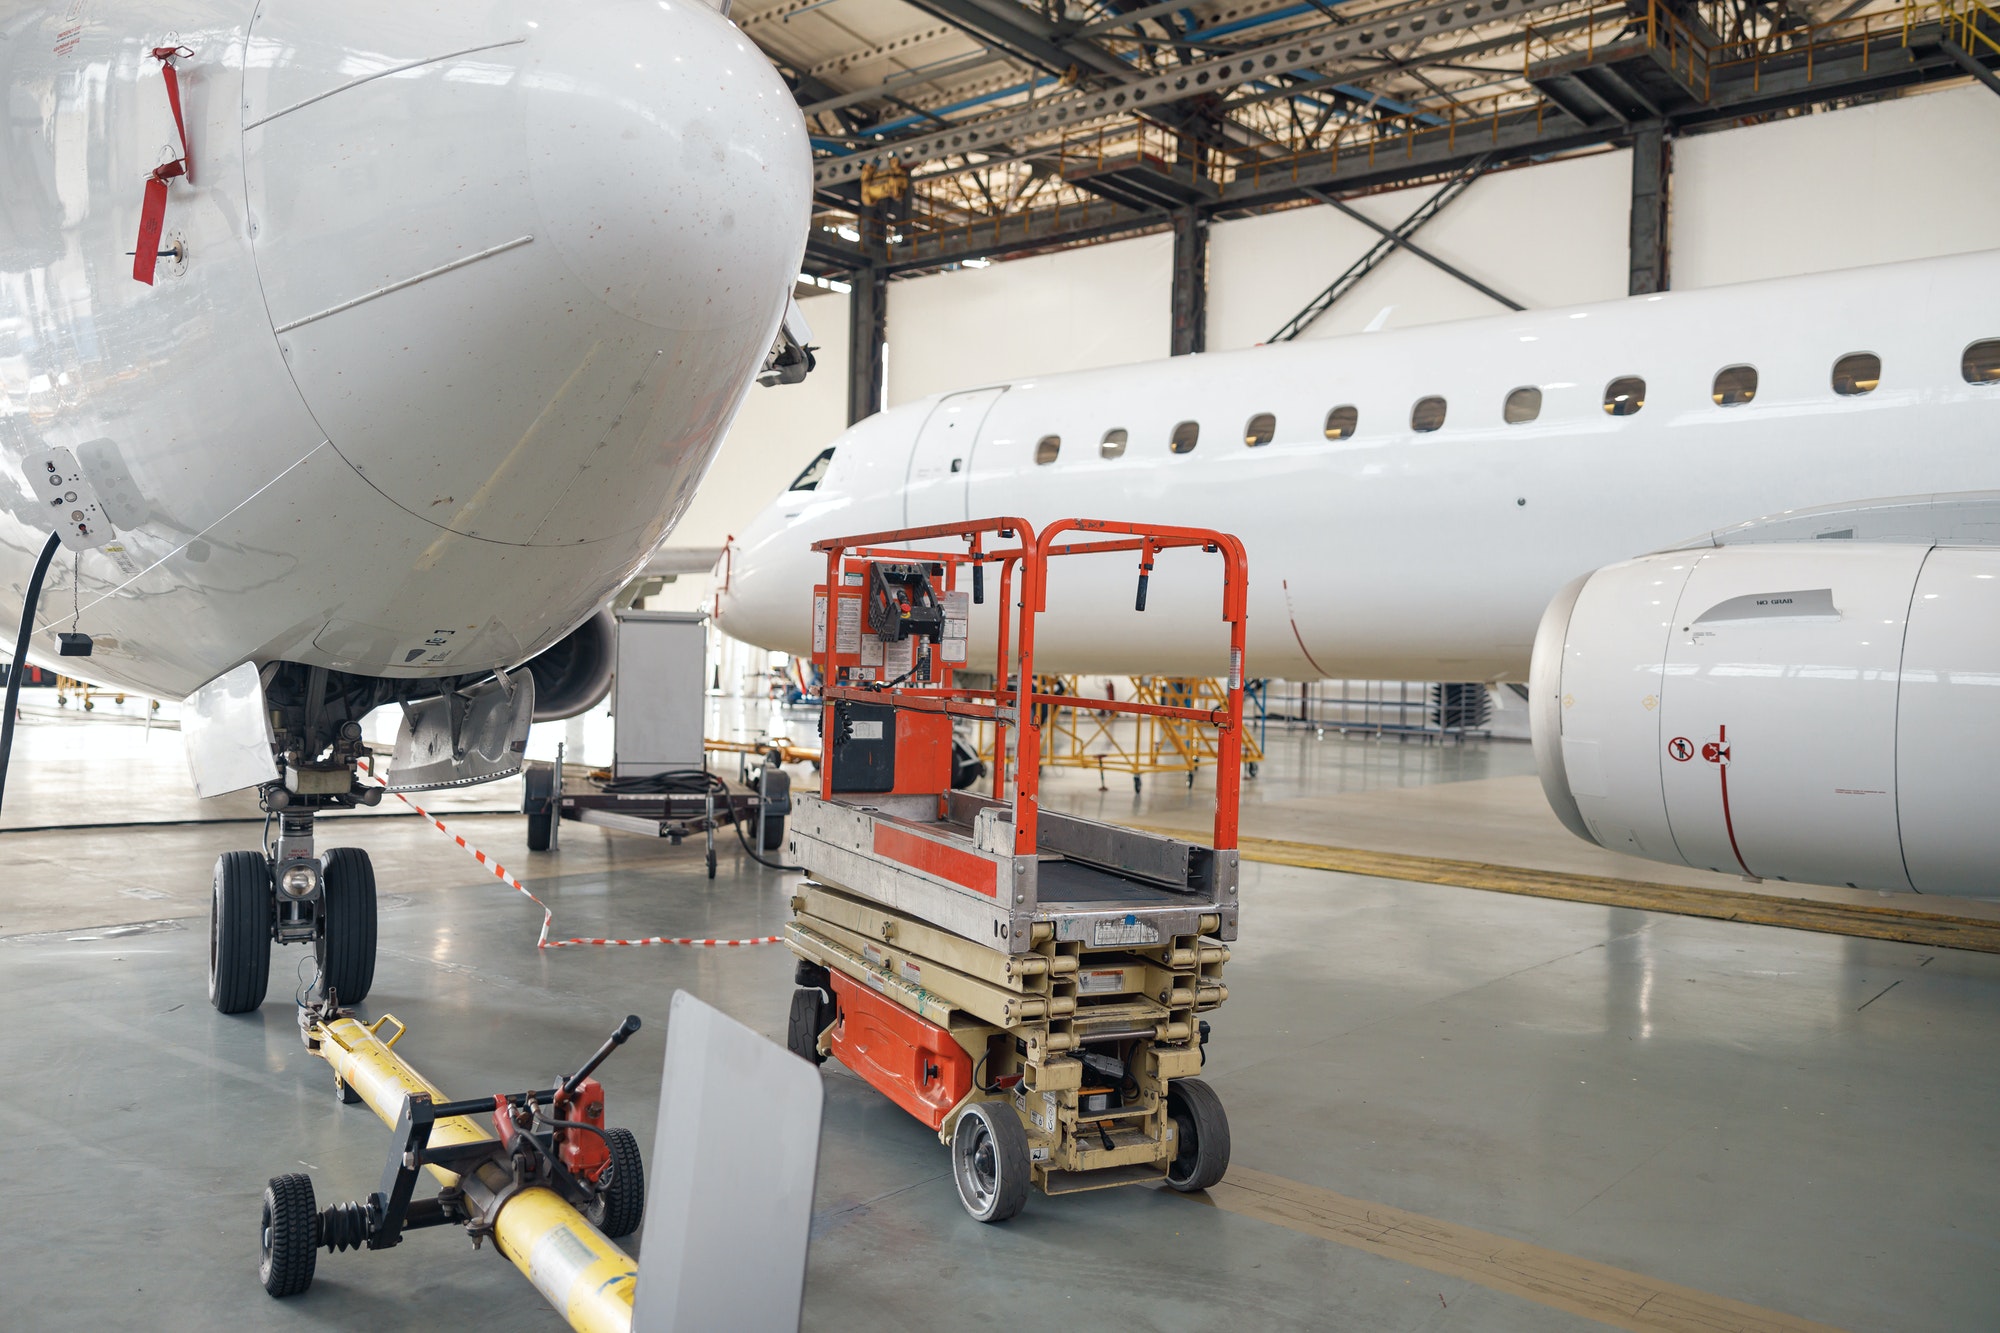 Passenger airplane on maintenance repair check in airport hangar indoors in the daytime